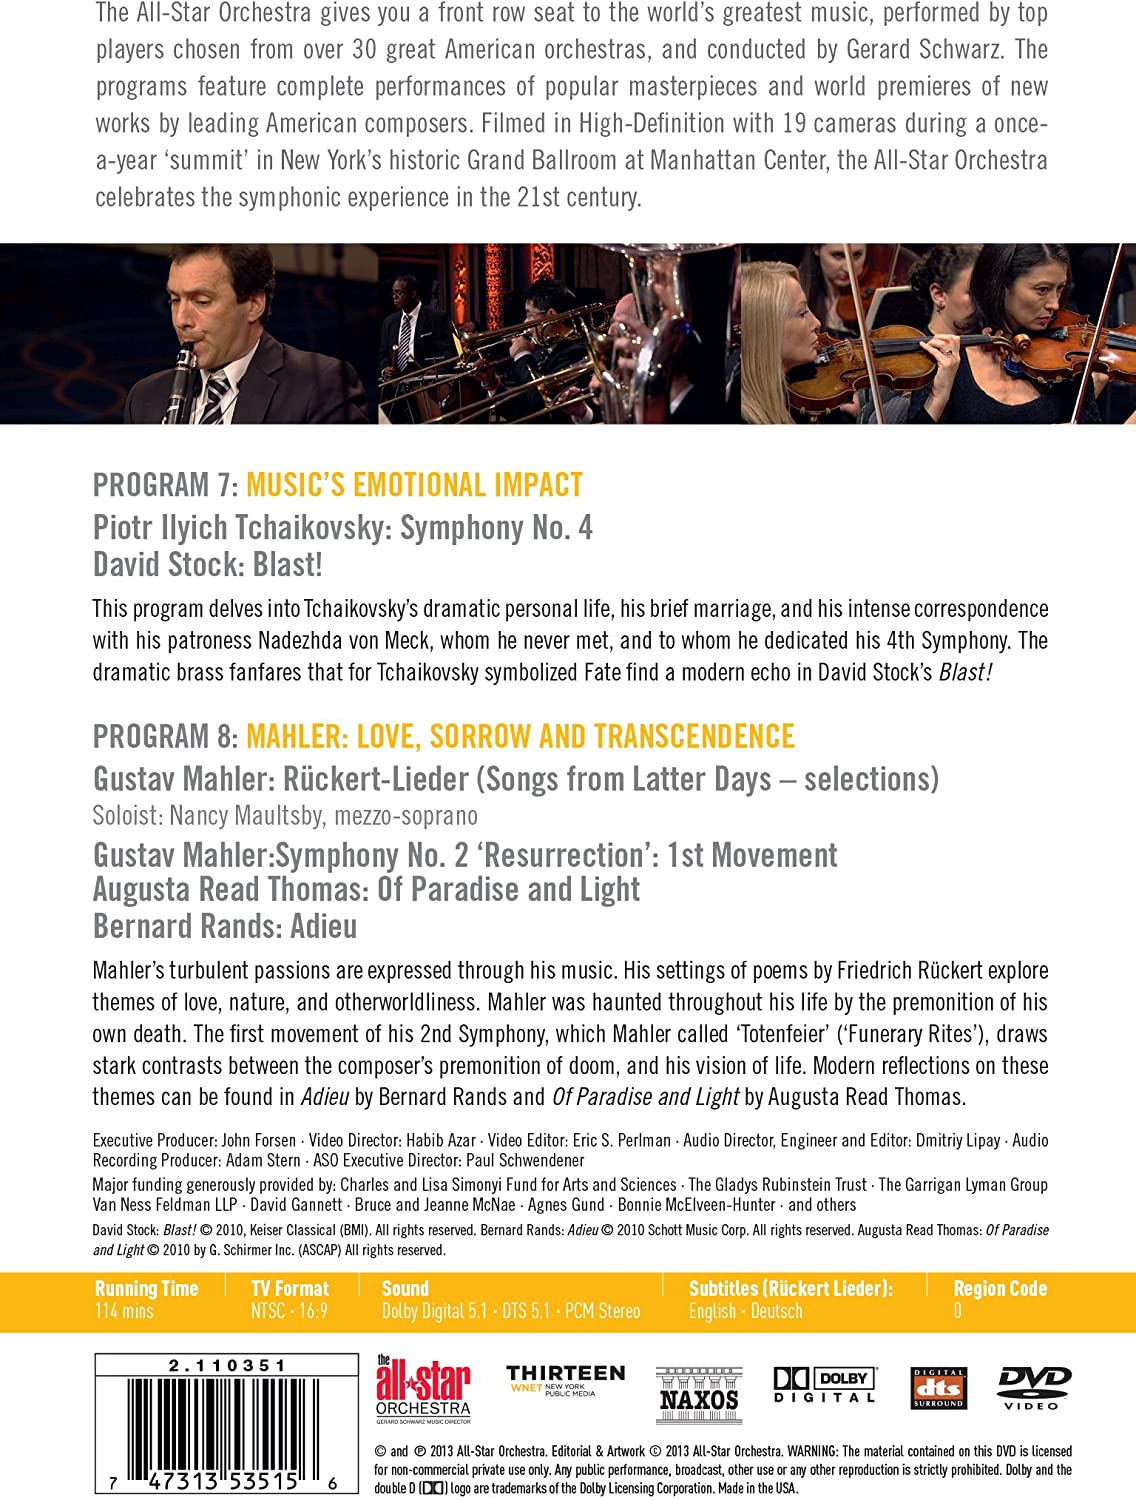 The All-Star Orchestra Programs 7 & 8: Tchaikovsky, Mahler - slide-1